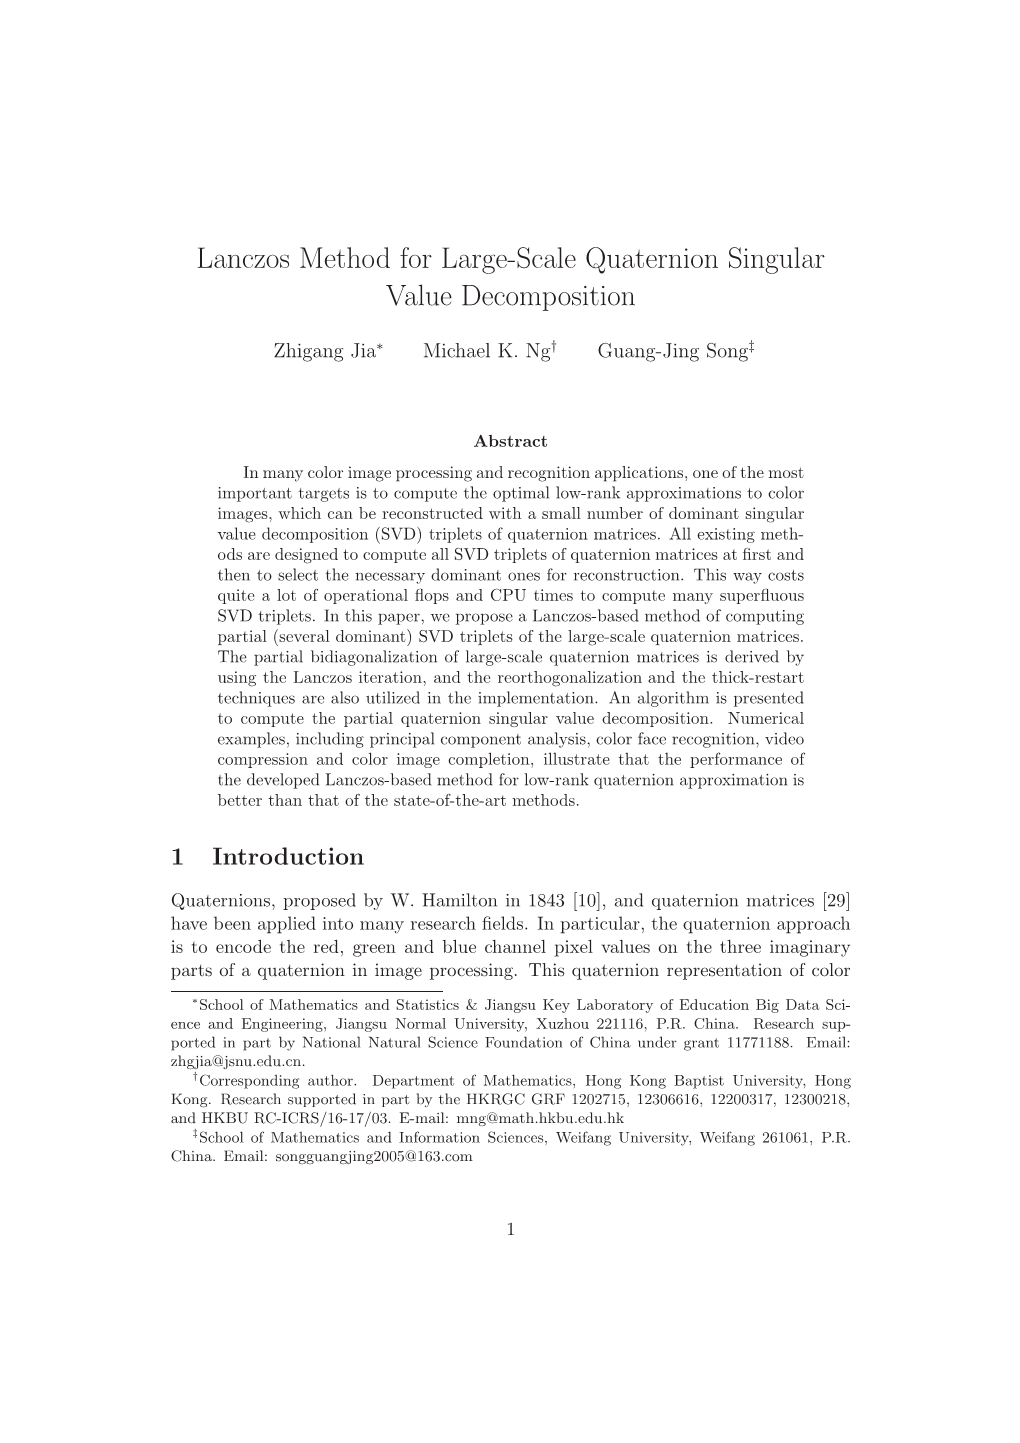 Lanczos Method for Large-Scale Quaternion Singular Value Decomposition